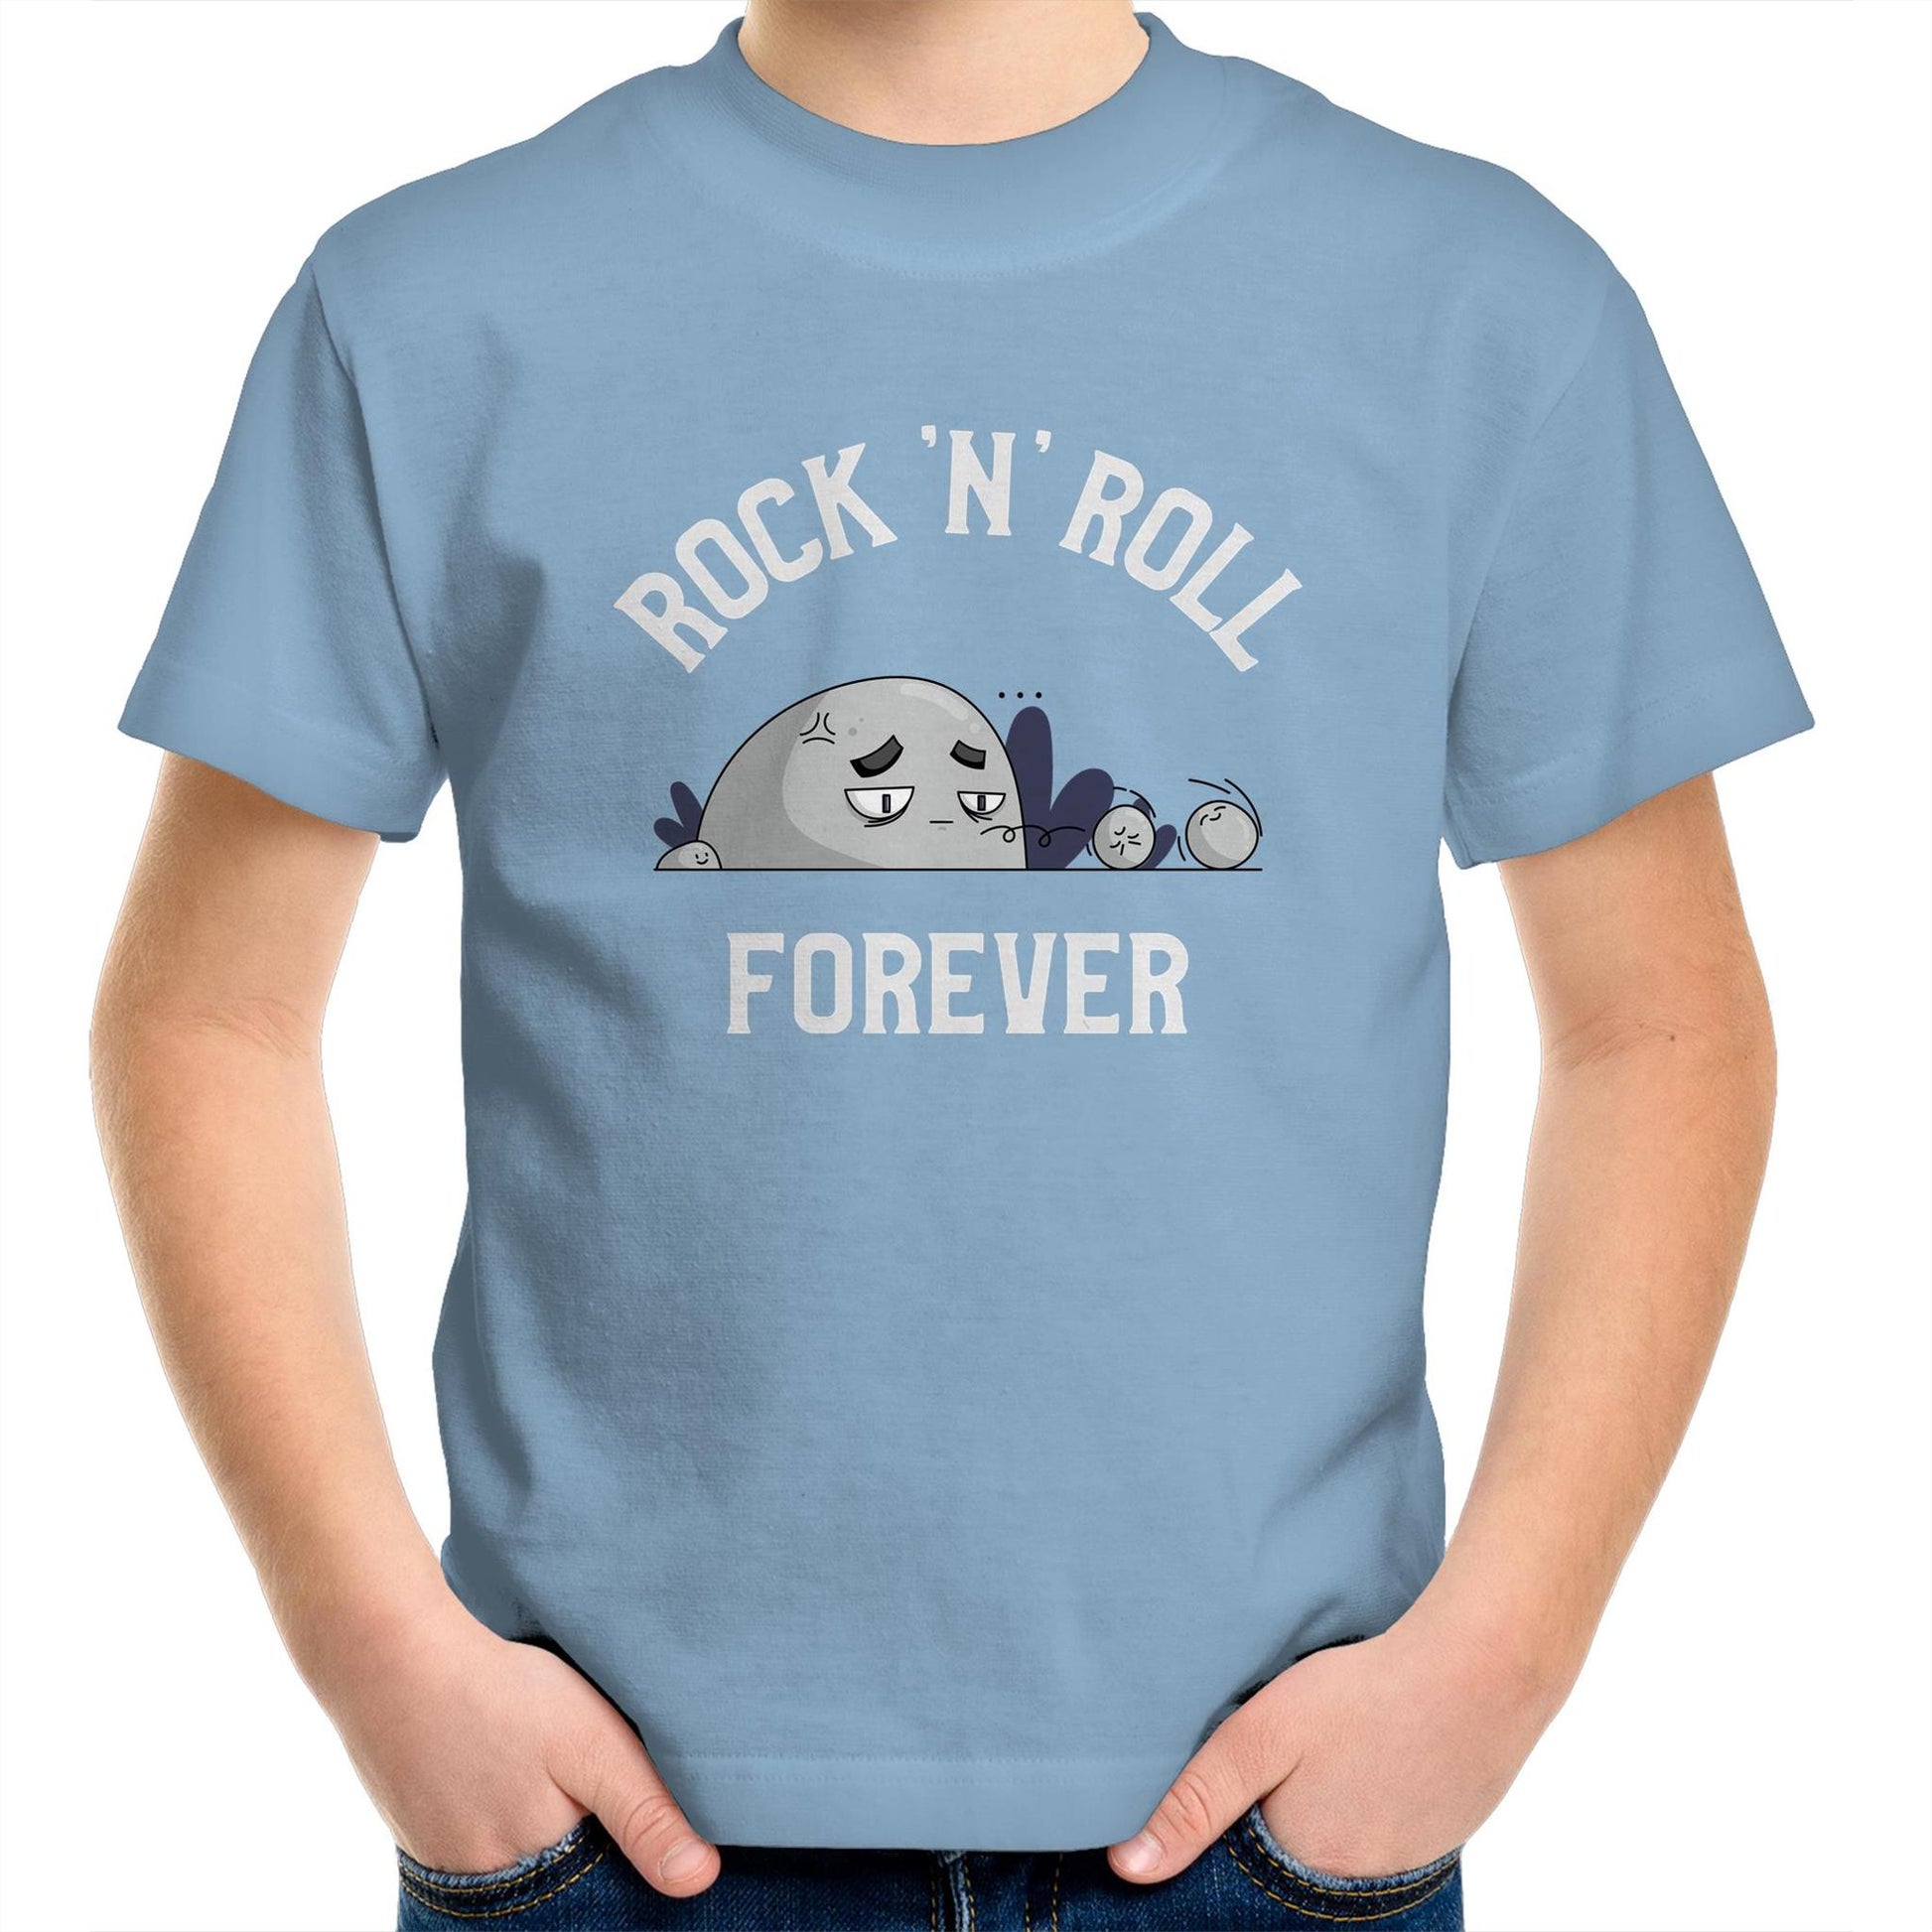 Rock 'N' Roll Forever - Kids Youth T-Shirt Carolina Blue Kids Youth T-shirt Music